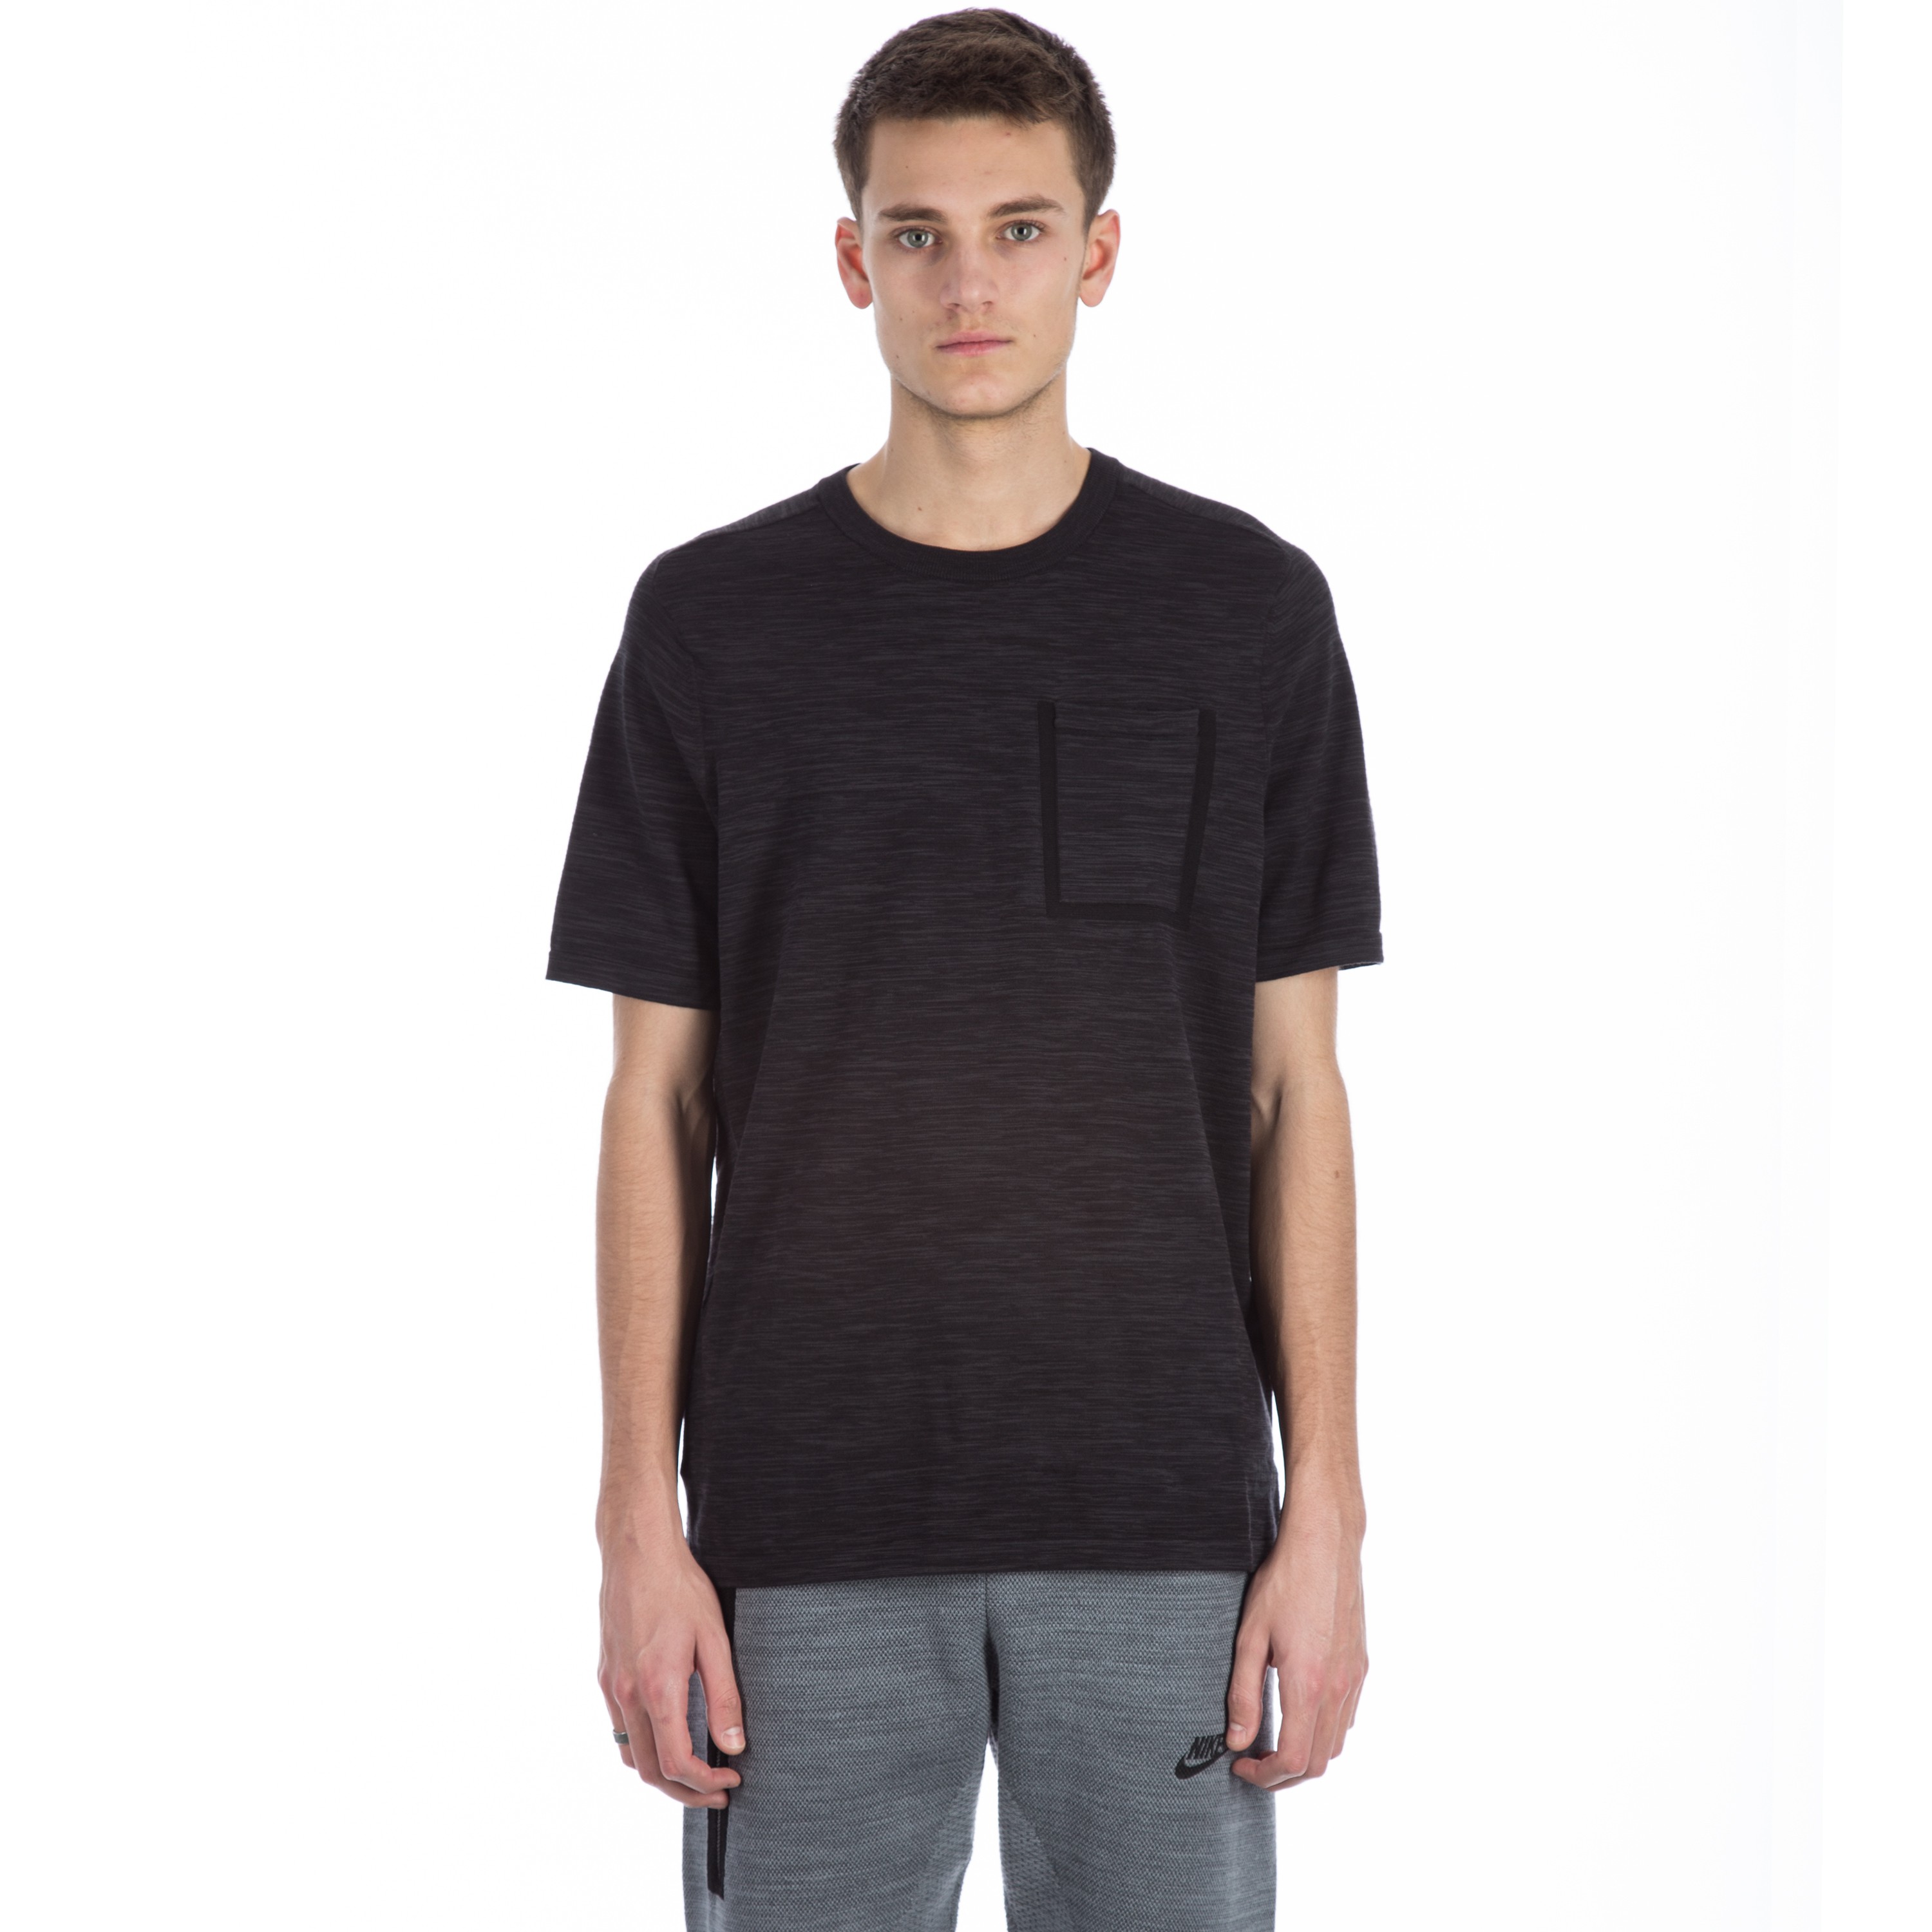 Nike Tech Knit Pocket T-shirt (Black/Anthracite) - Consortium.